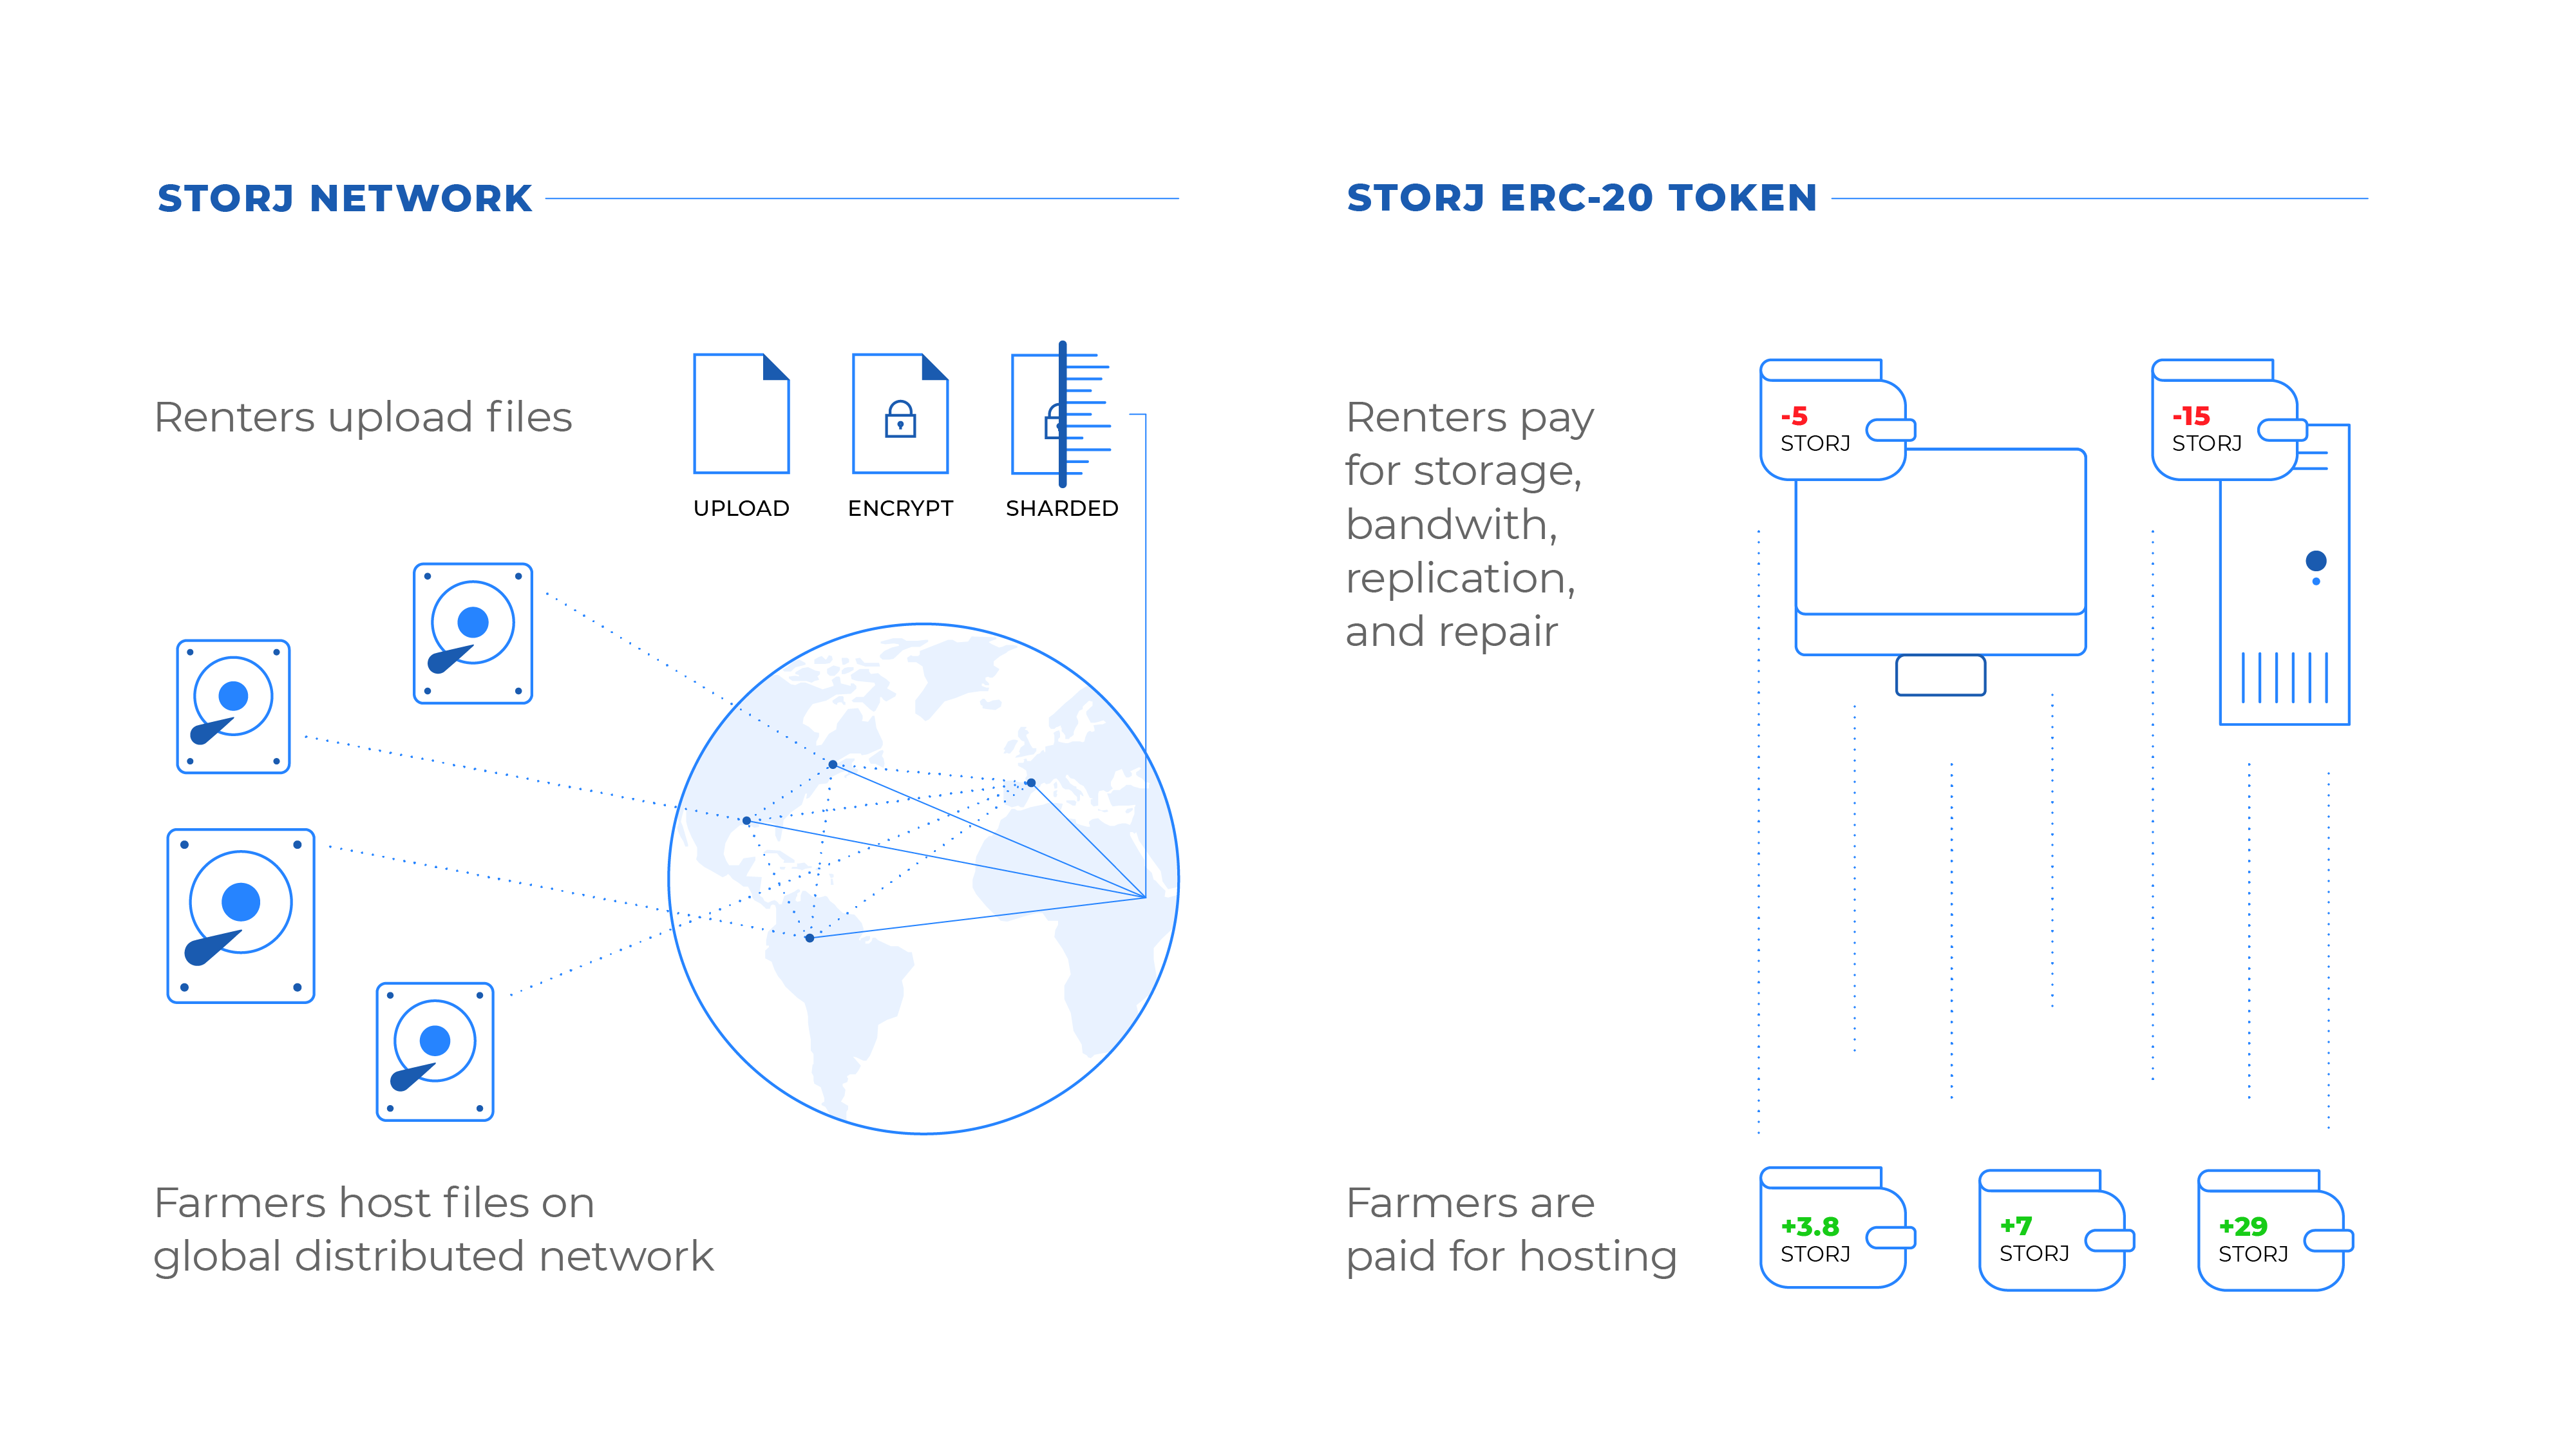 Network and Token Illustration